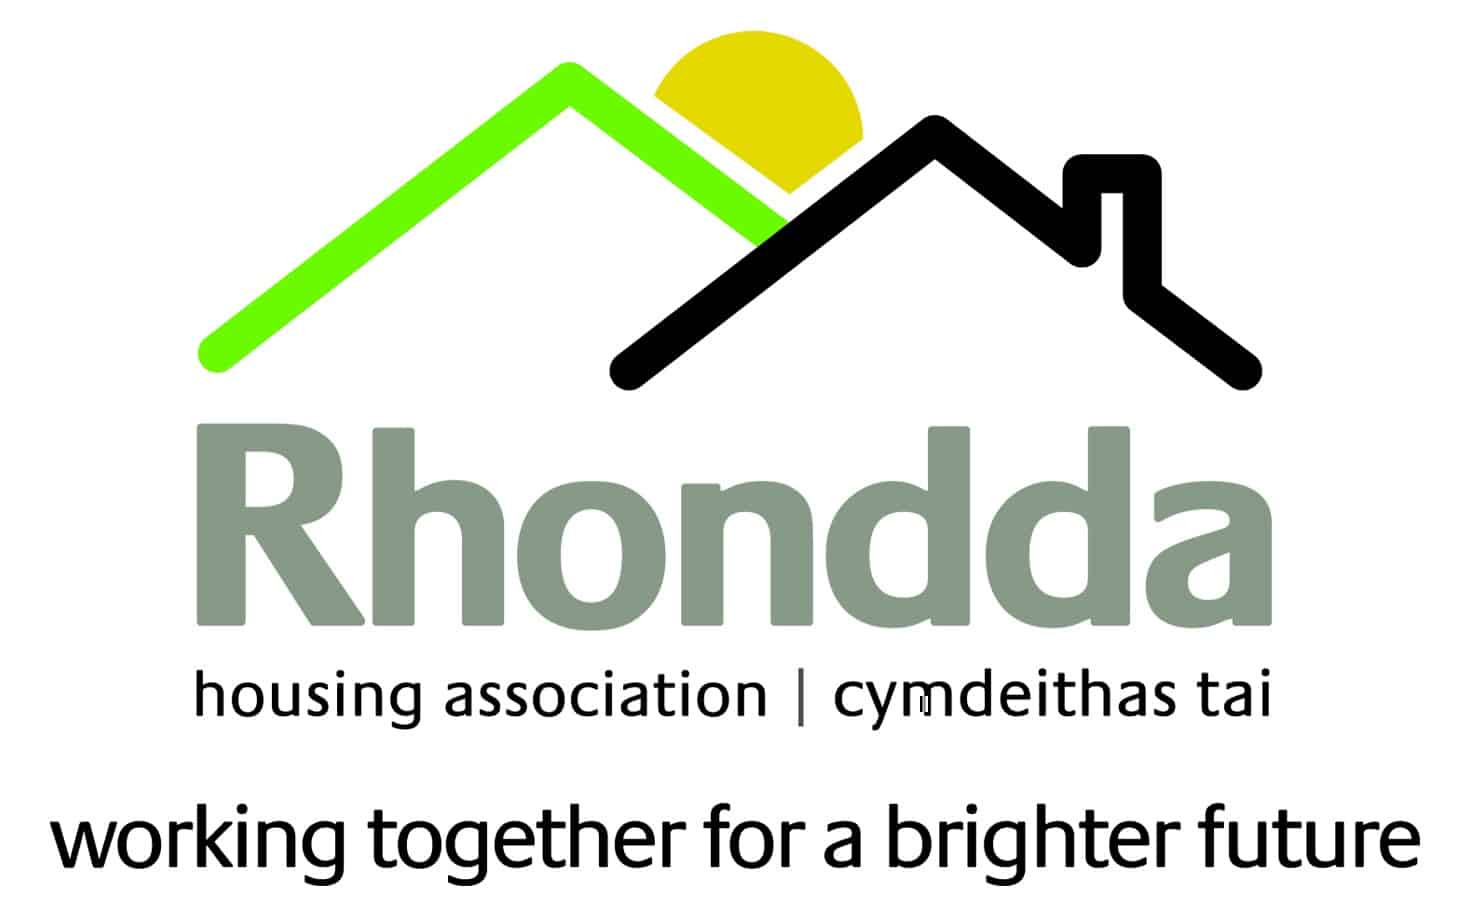 Rhondda Housing Association